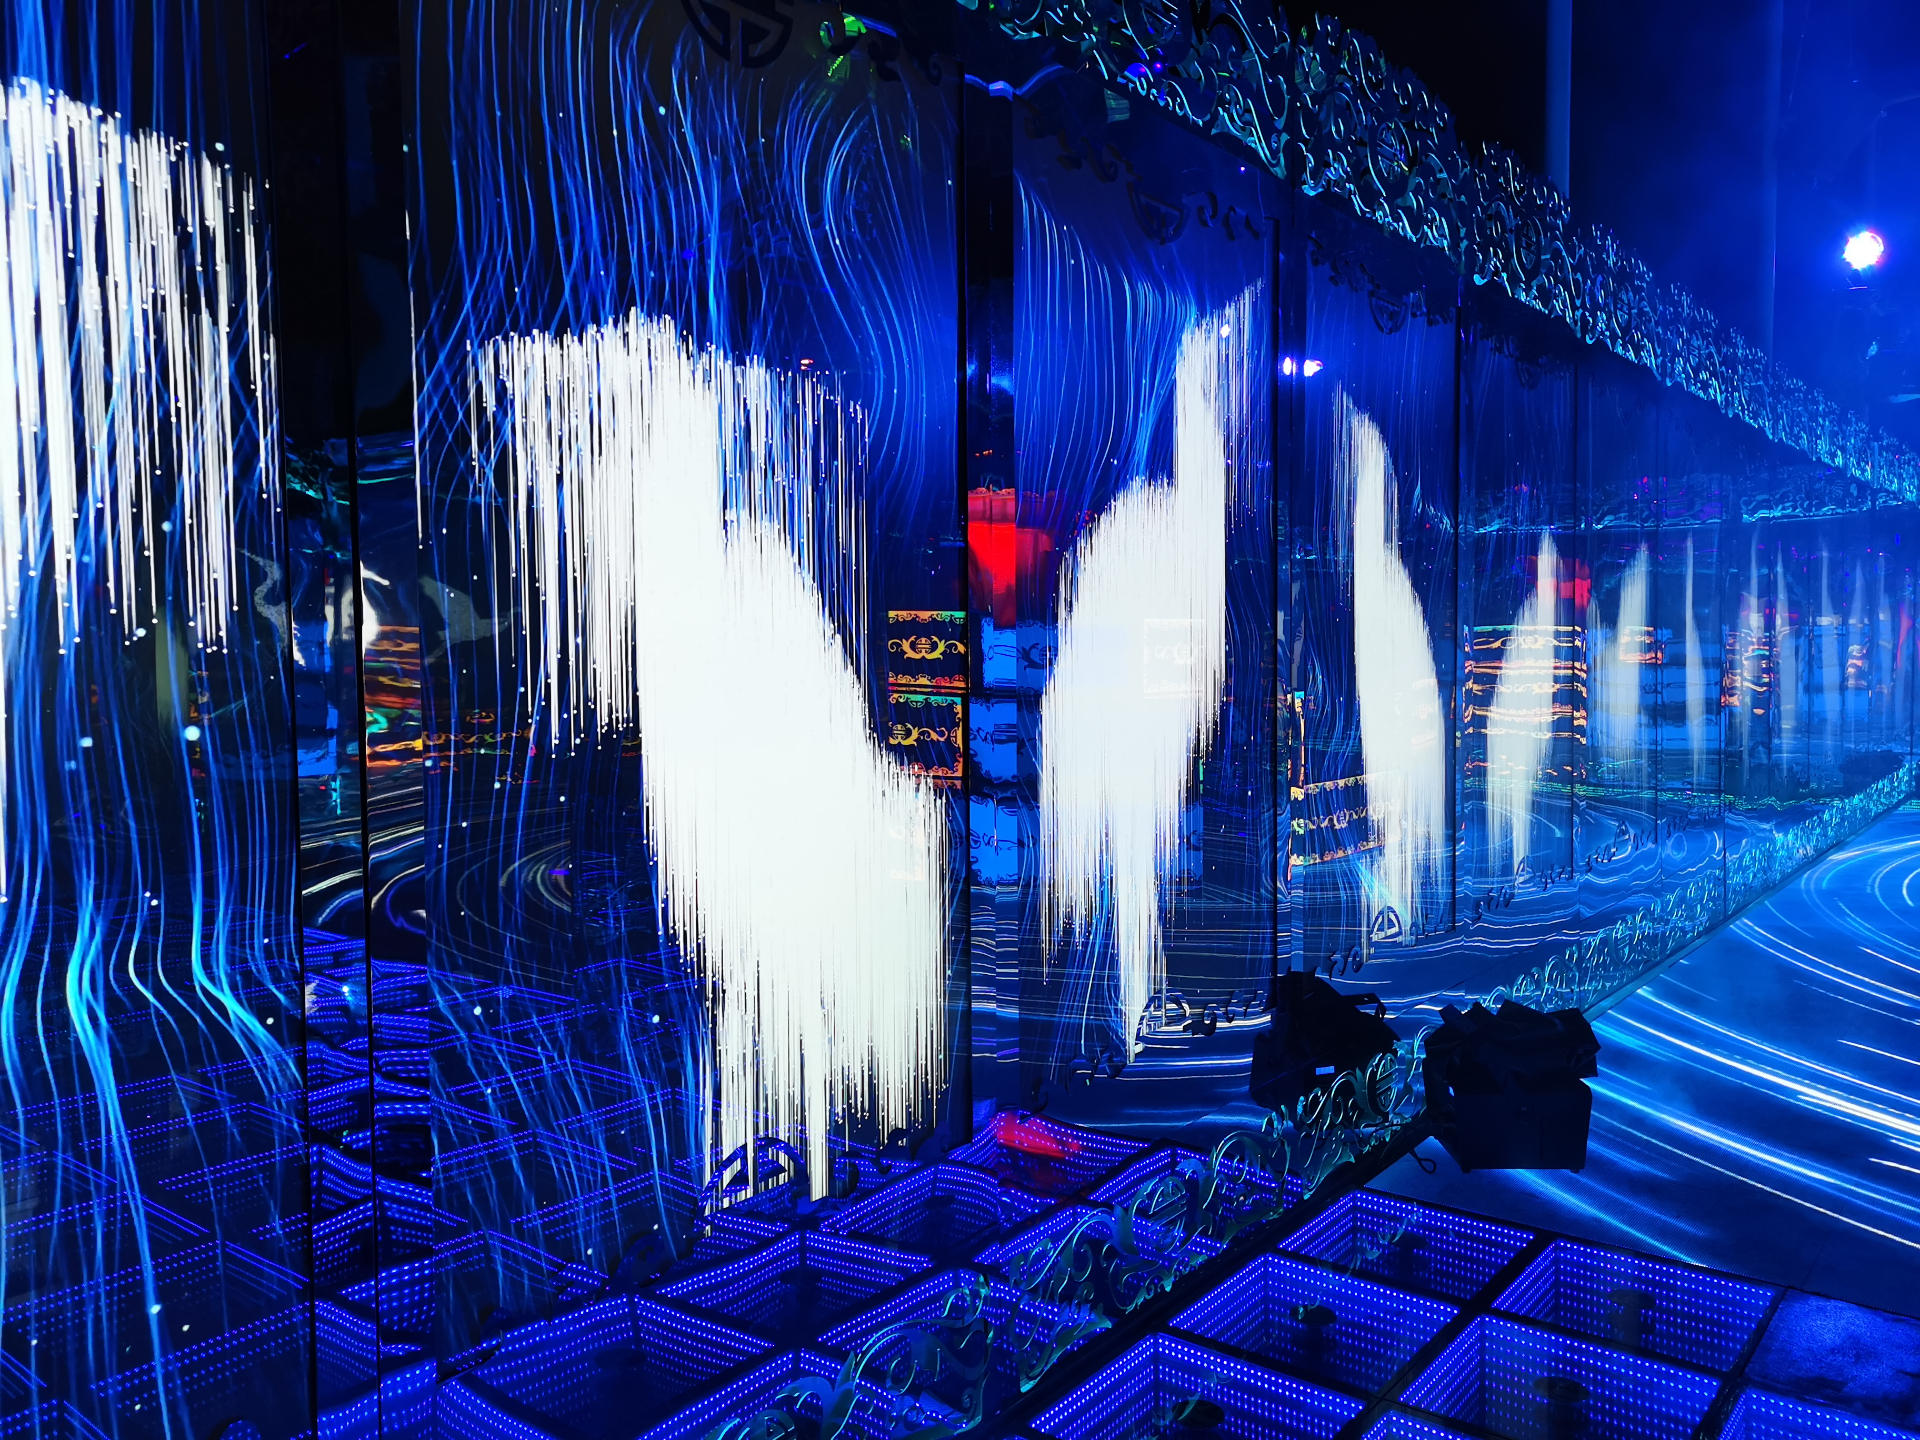 Vanyee created an immersive light show performance